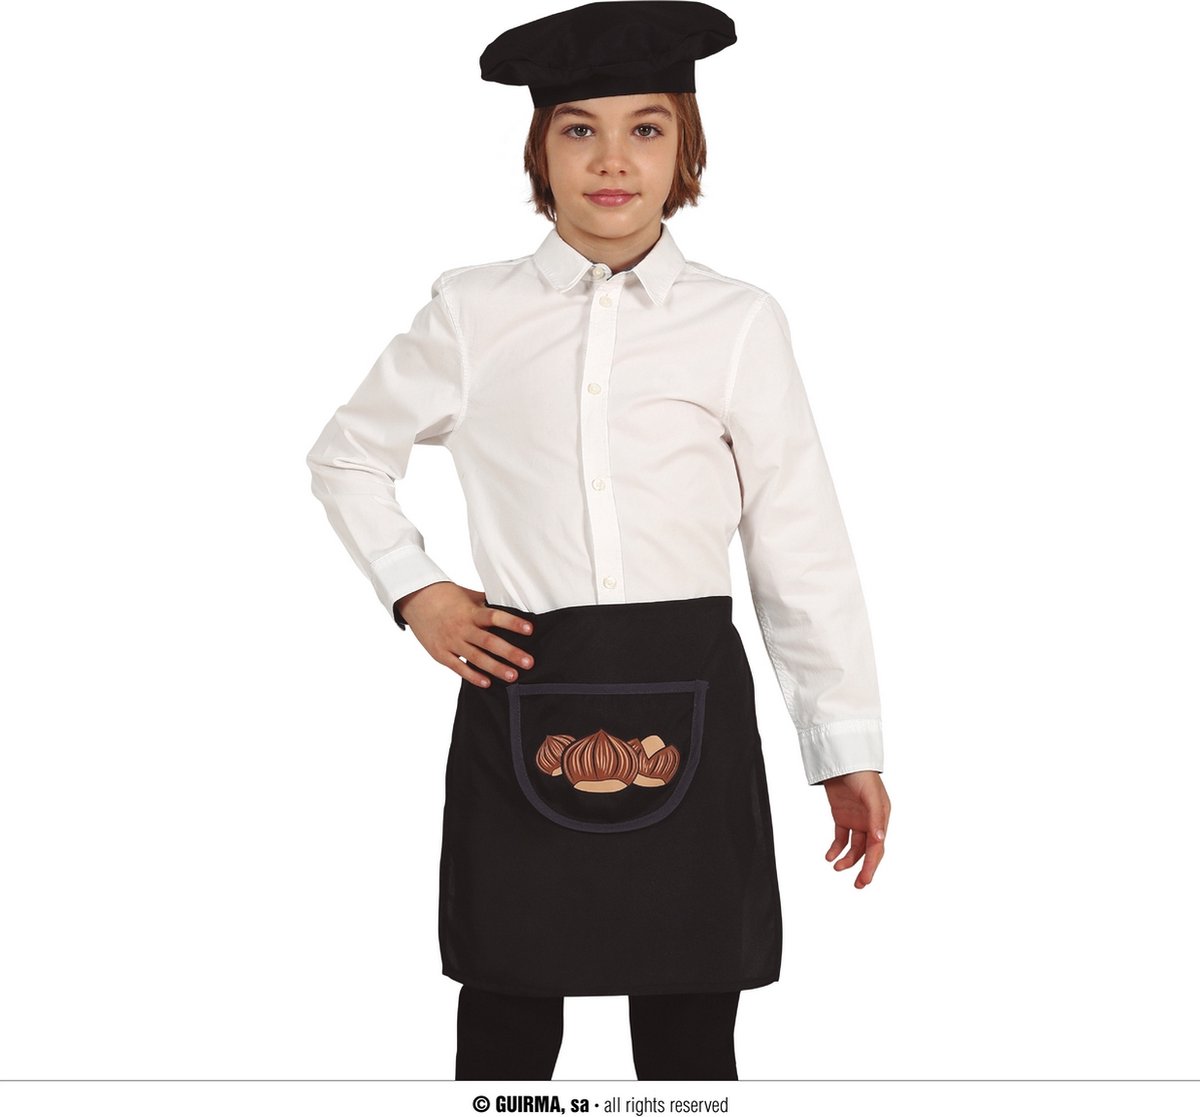 Guirma - Eten & Drinken Kostuum - Nootjes Kraker Chef Kok Schort En Hoed Kind Kostuum - Zwart - Carnavalskleding - Verkleedkleding